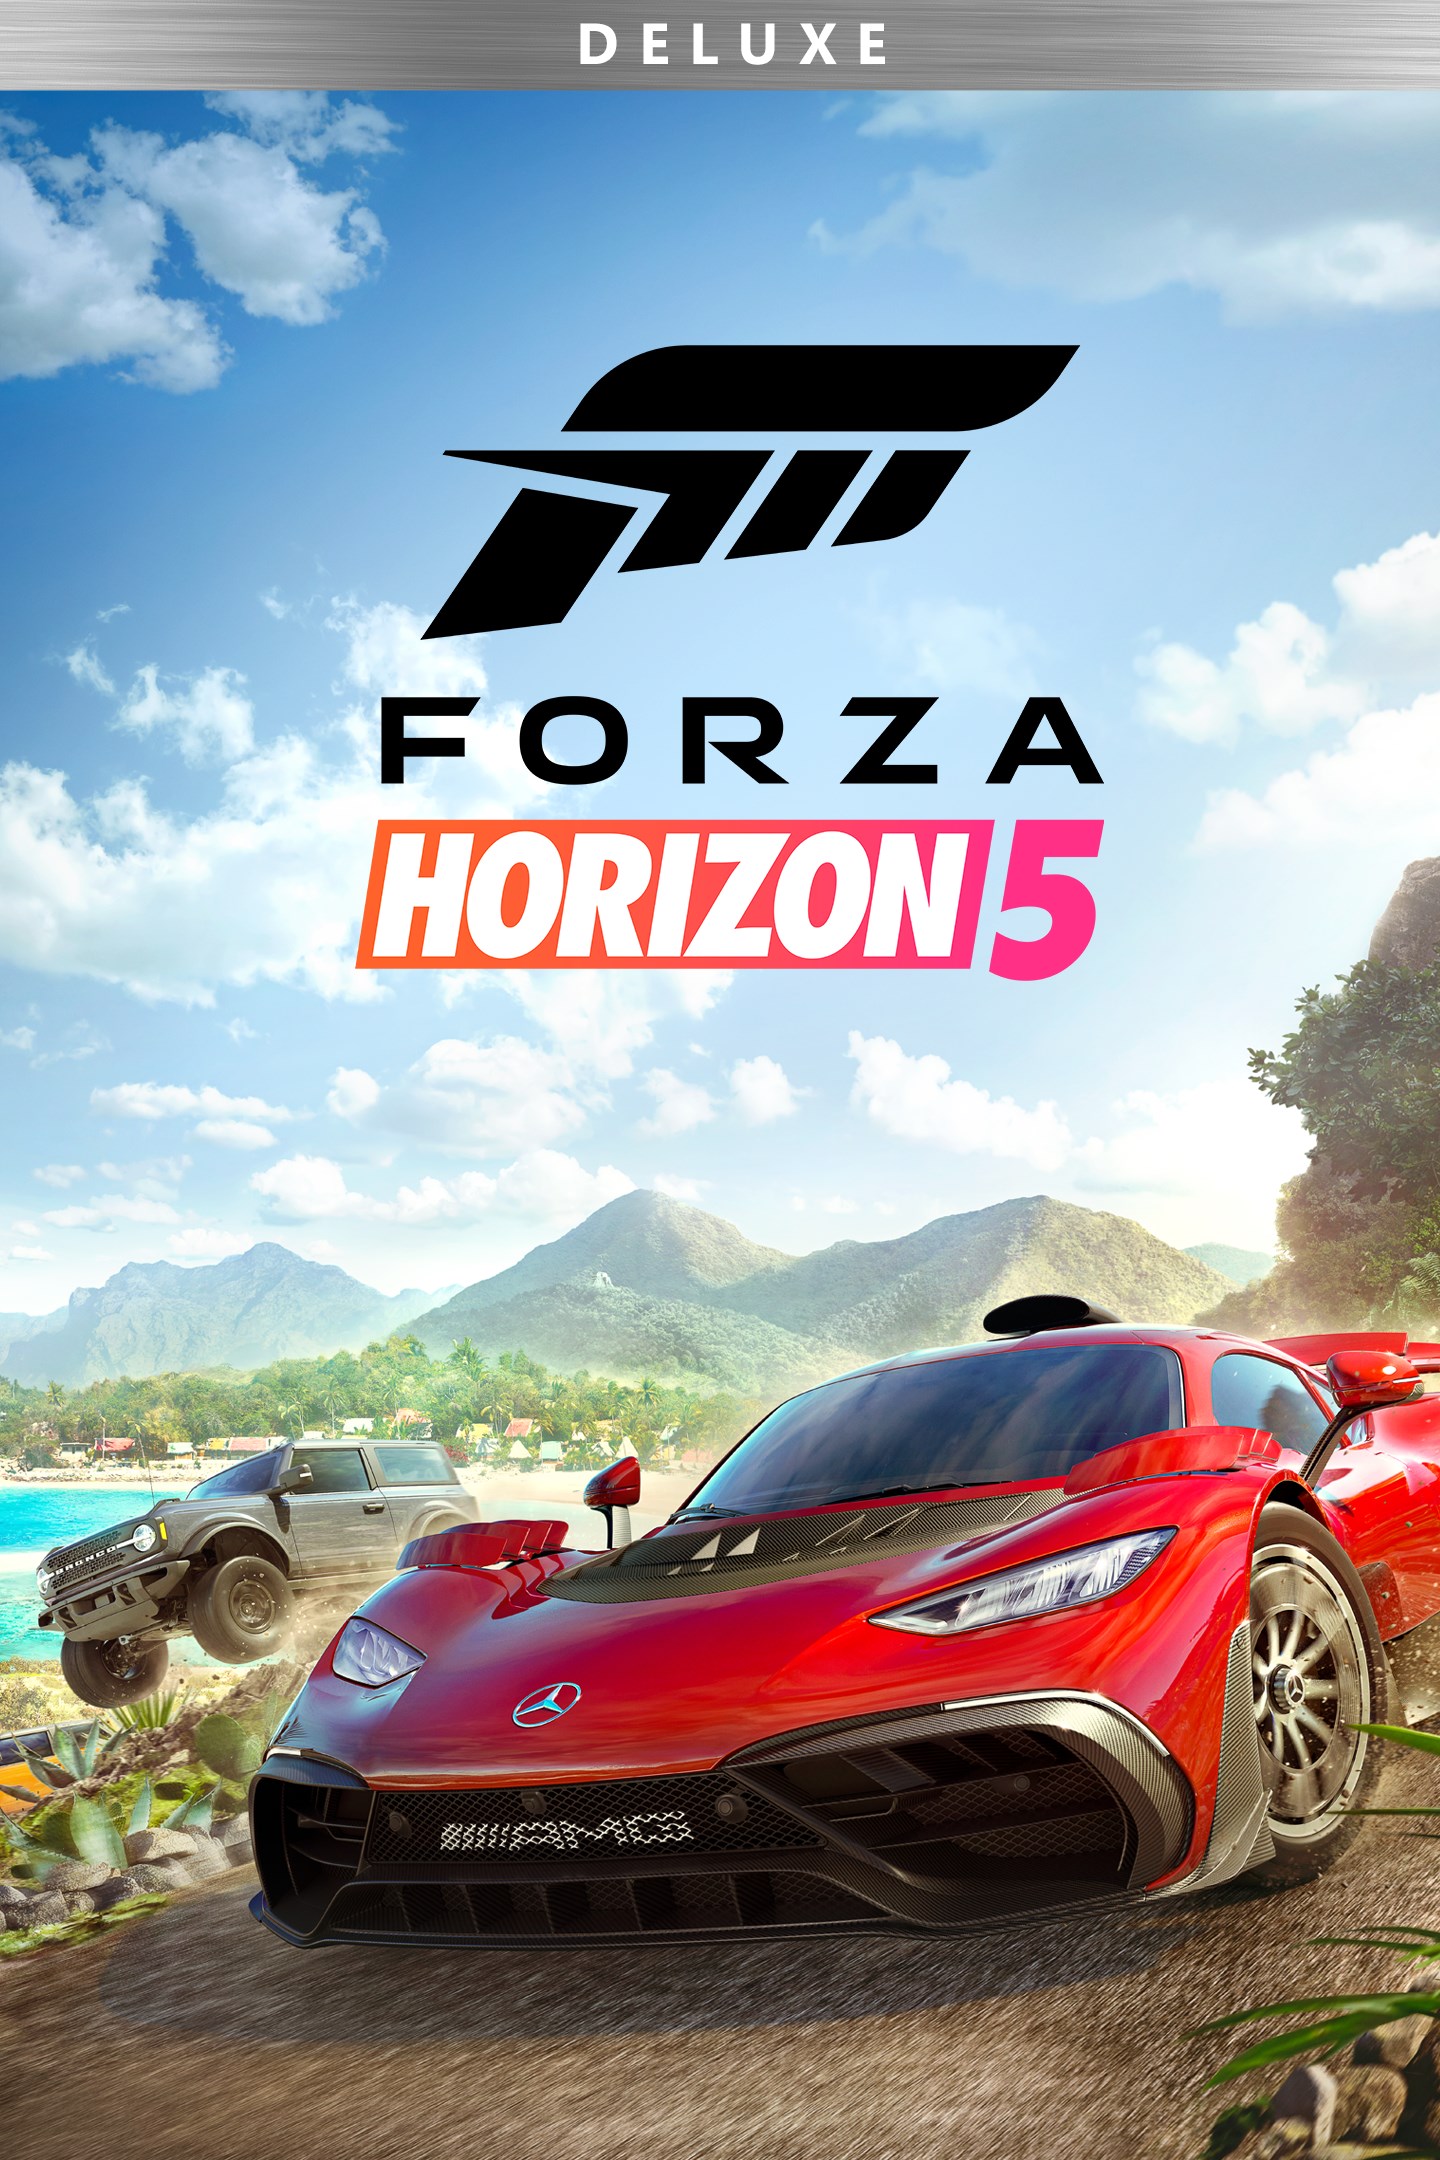 Forza Horizon 5 Deluxe Edition box shot